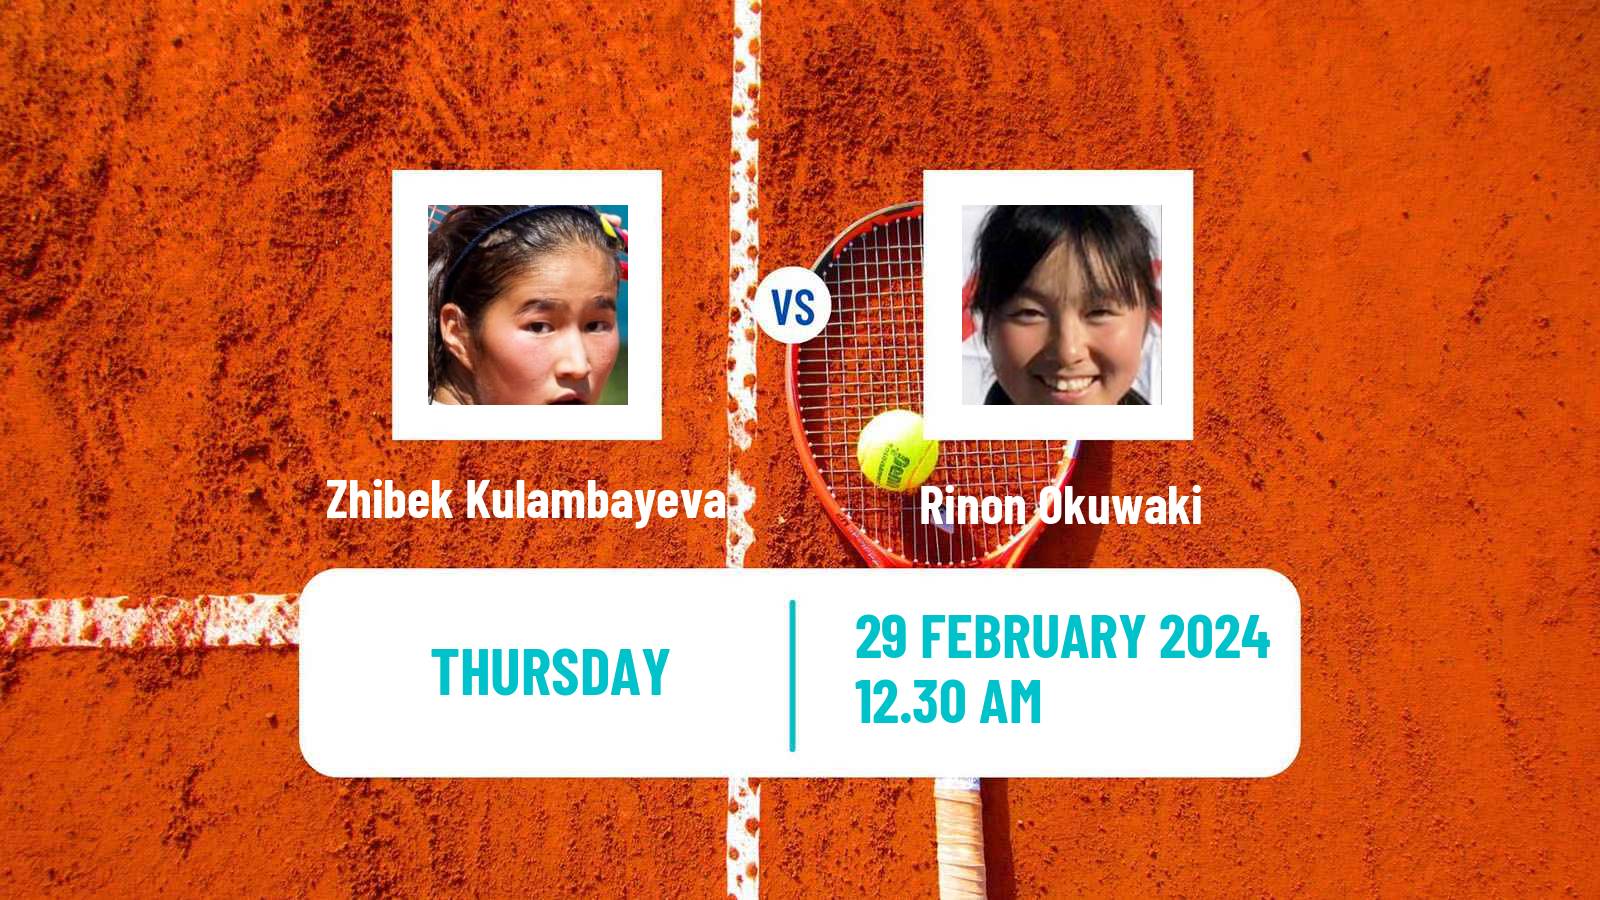 Tennis ITF W35 Gurugram Women Zhibek Kulambayeva - Rinon Okuwaki